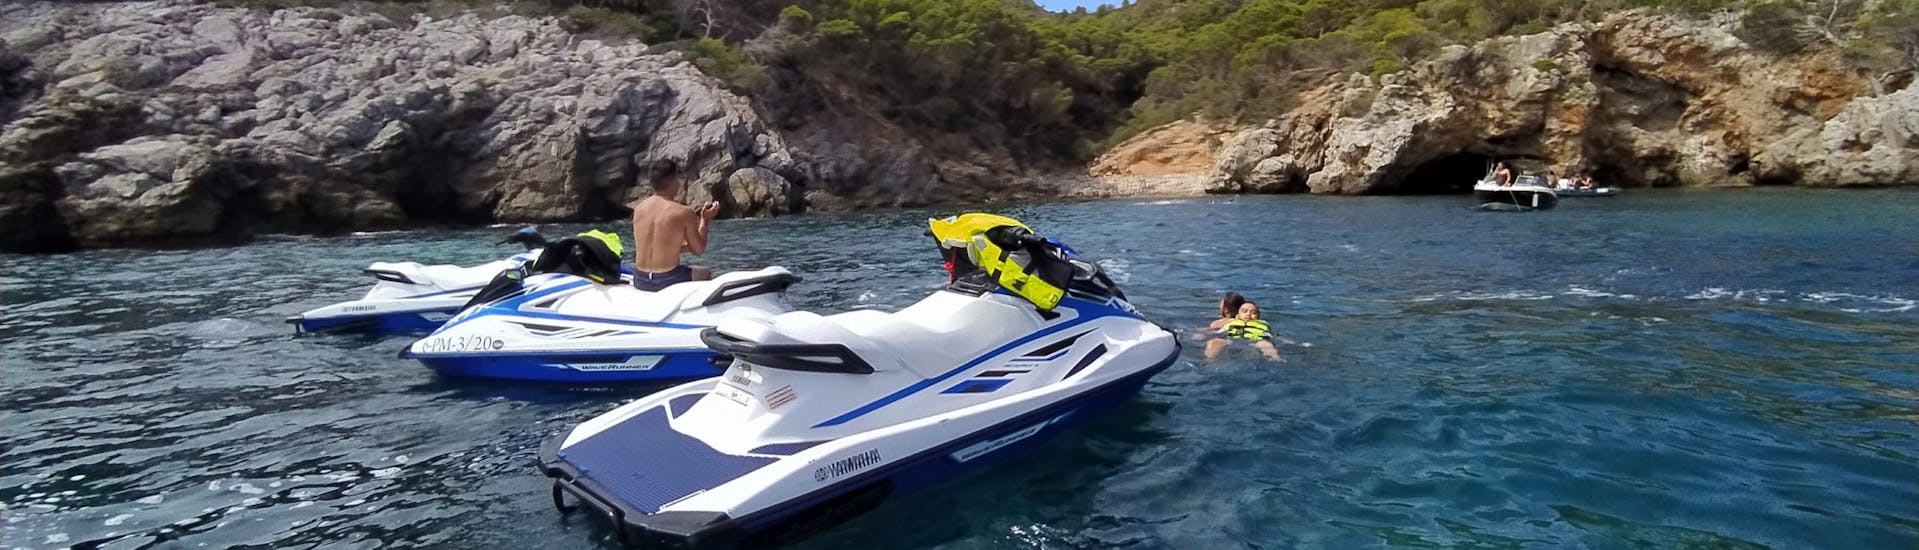 Des personnes profitent de la côte pendant un safari en jet ski à Cala Millor avec SeaSports Mallorca.